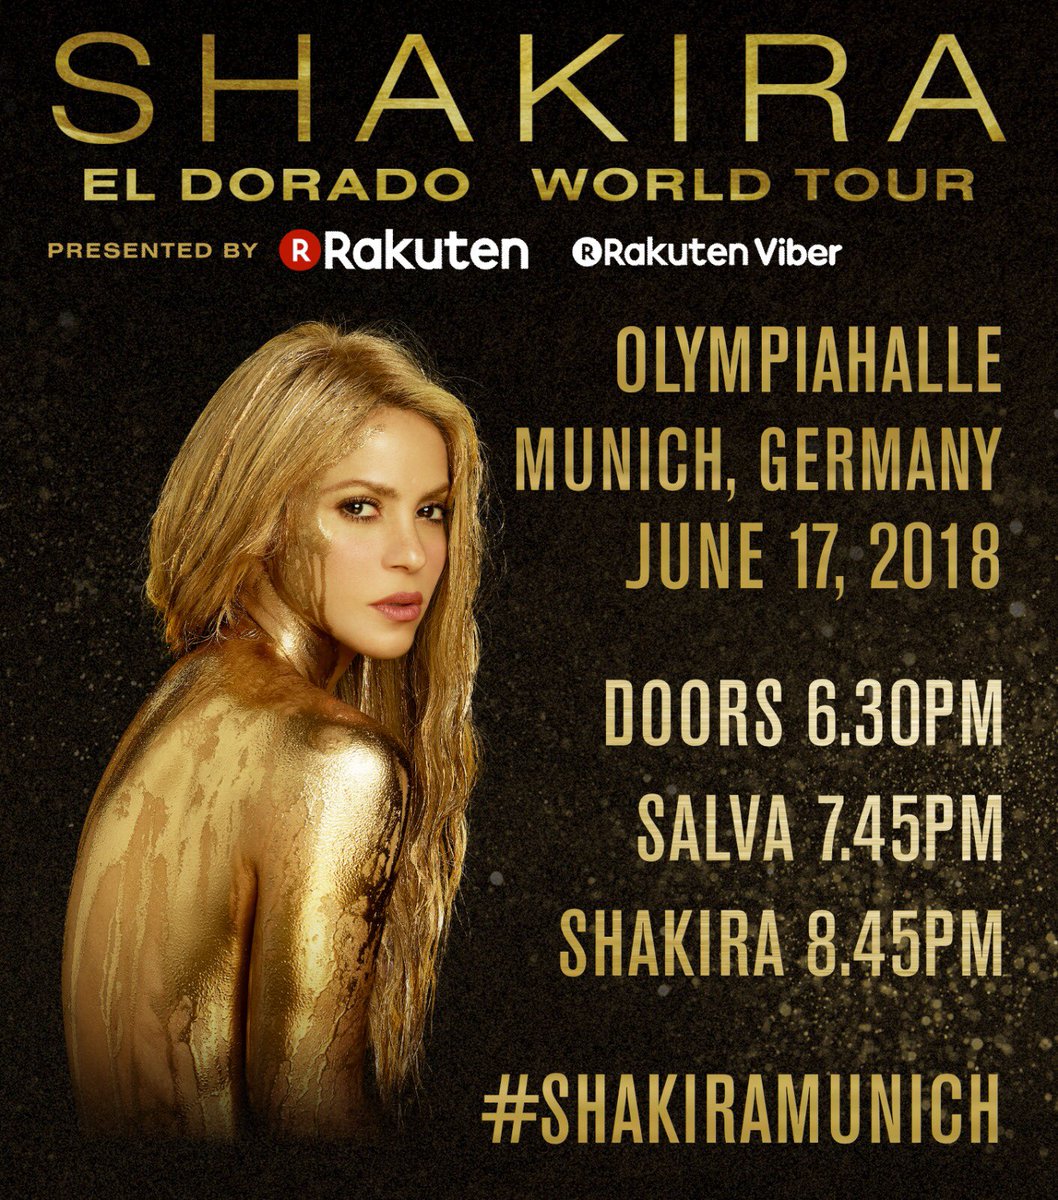 Hallo Deutschland! Here are the times for tonight's #ShakiraMunich show. ShakHQ https://t.co/avxGwr7GDw